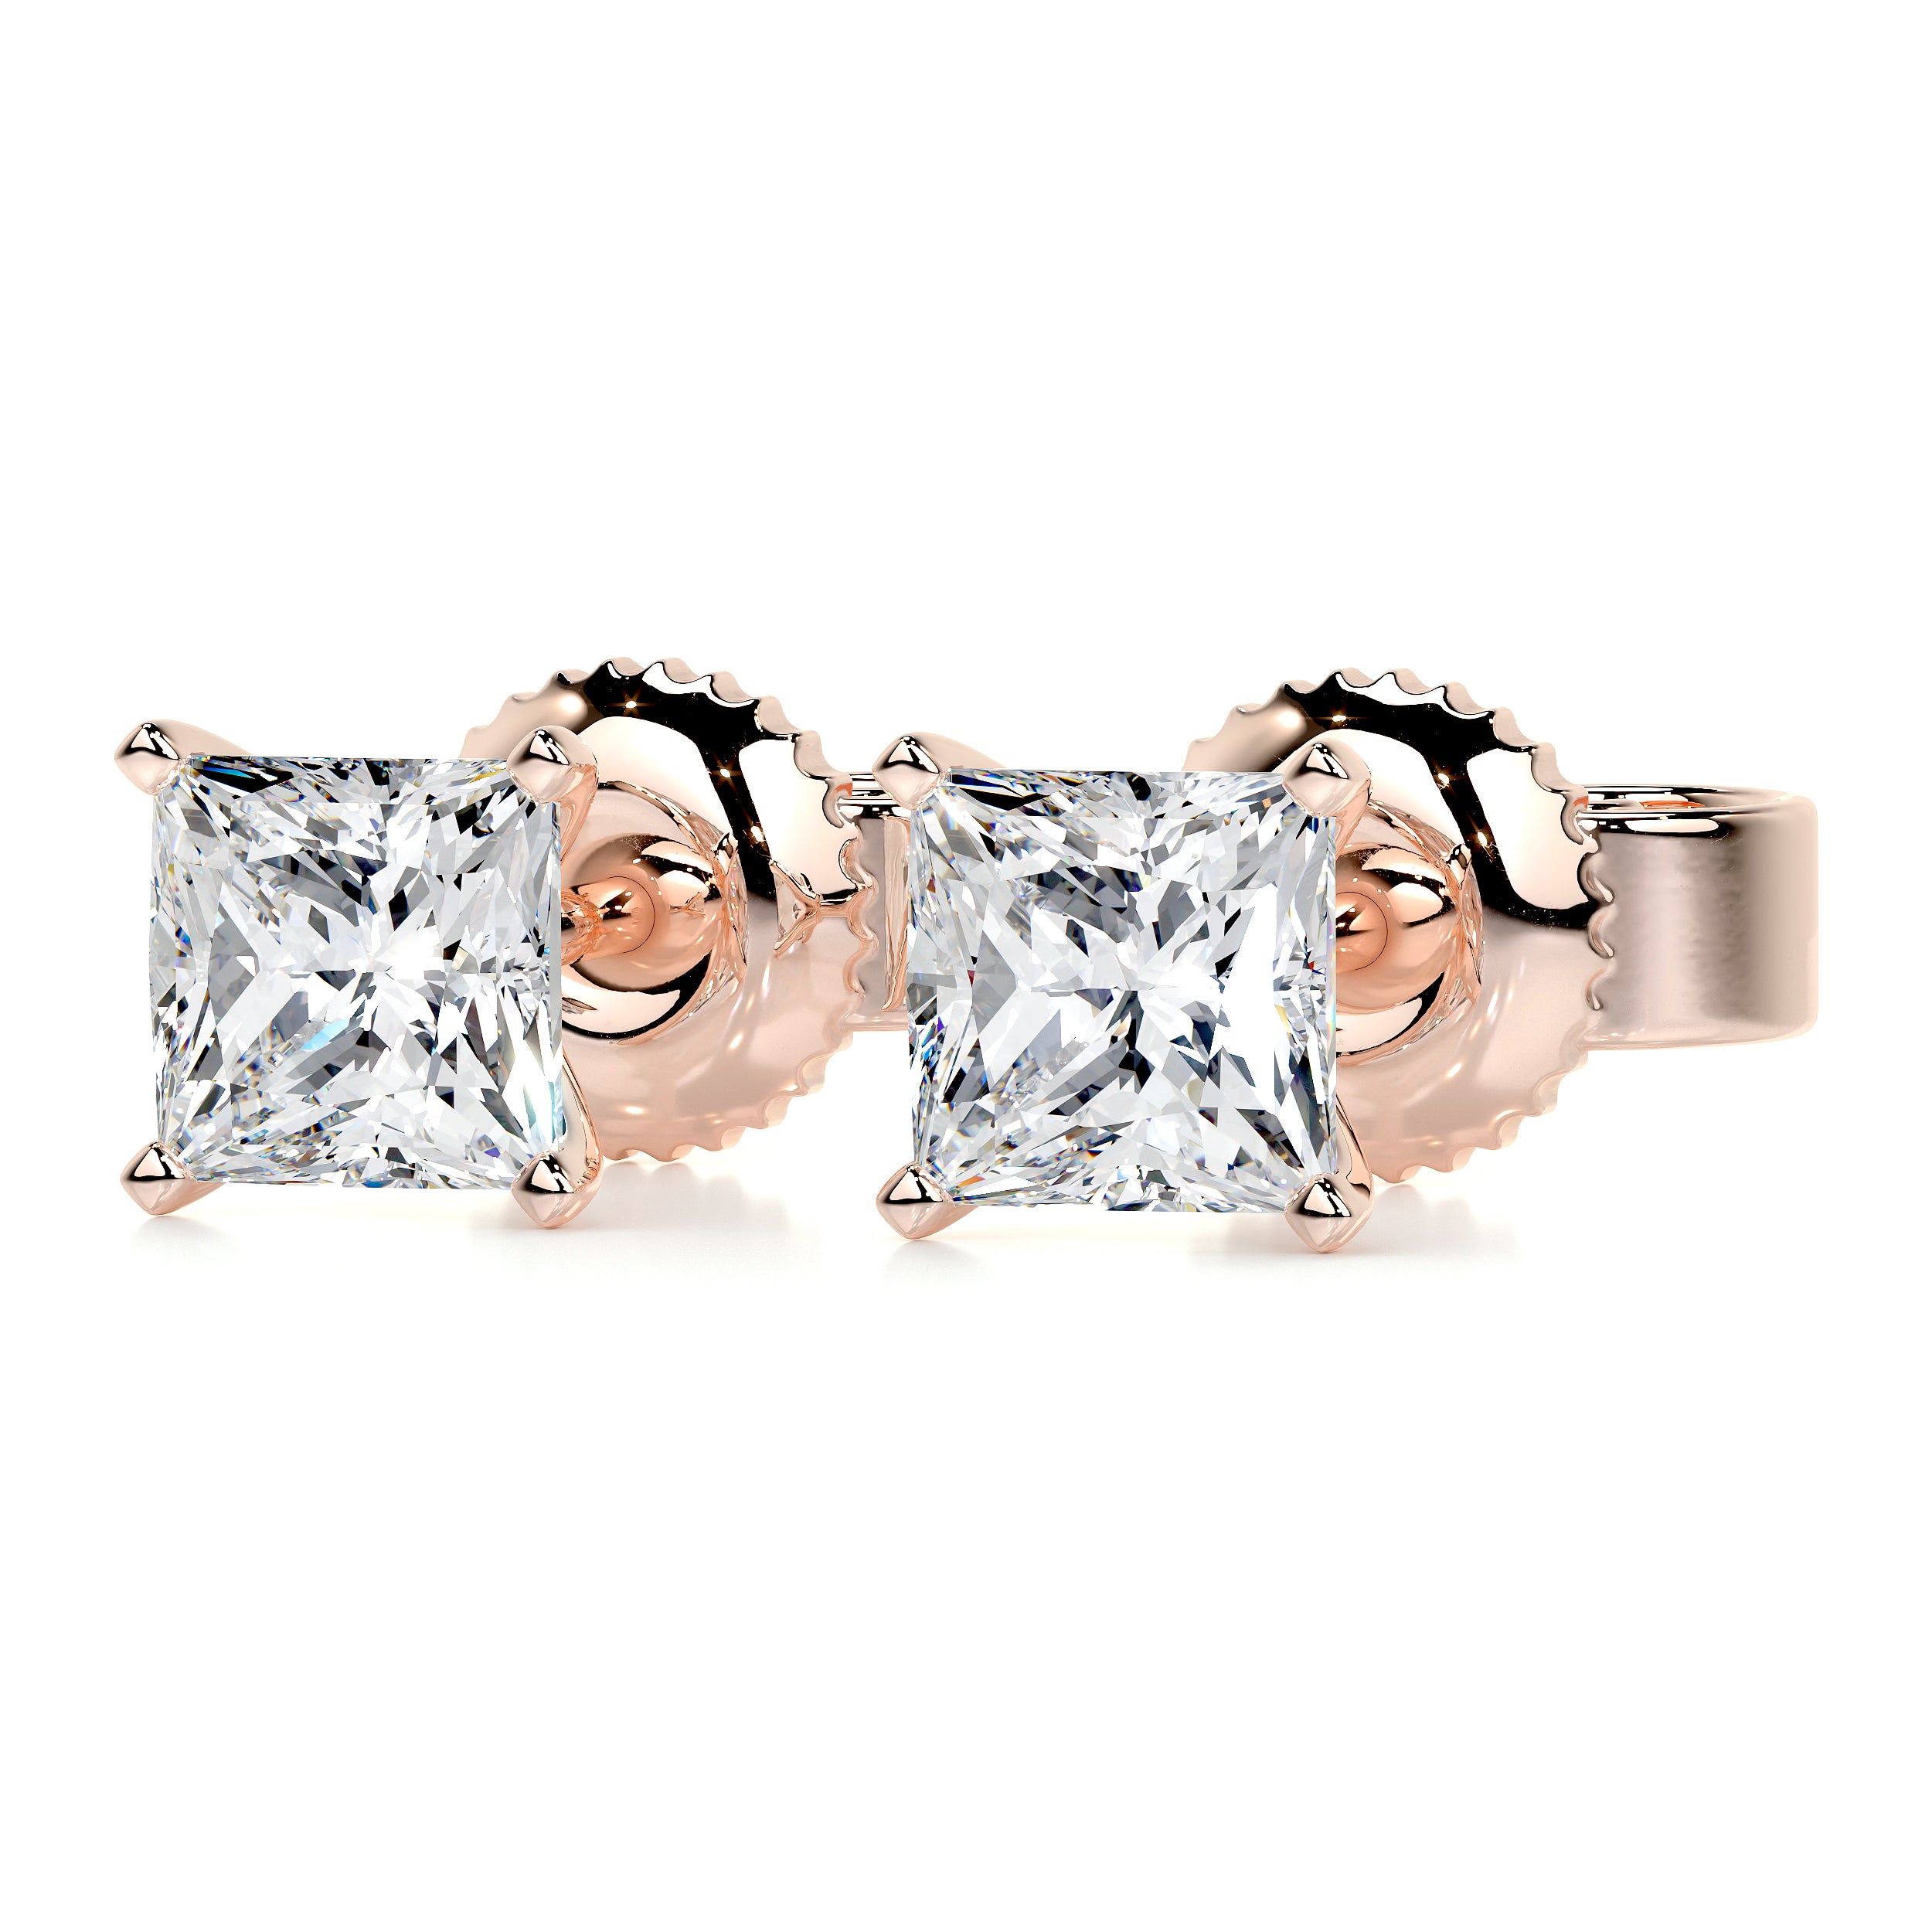 Jamie Diamond Earrings   (3 Carat) -14K Rose Gold